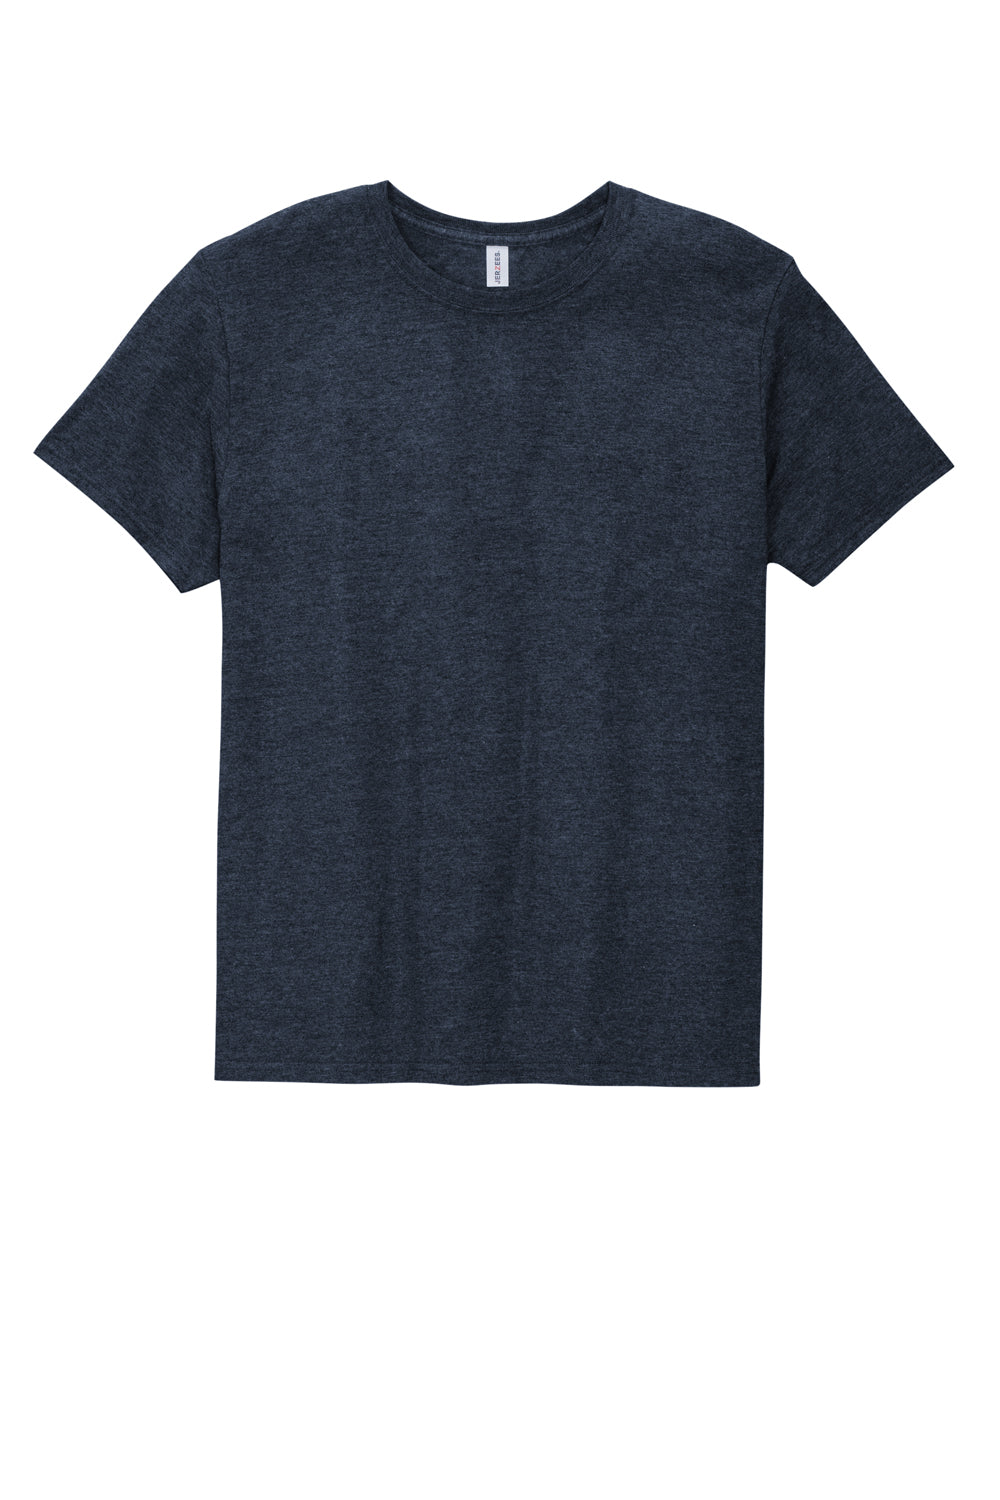 Jerzees 560M Mens Premium Blend Ring Spun Short Sleeve Crewneck T-Shirt Heather Indigo Blue Flat Front